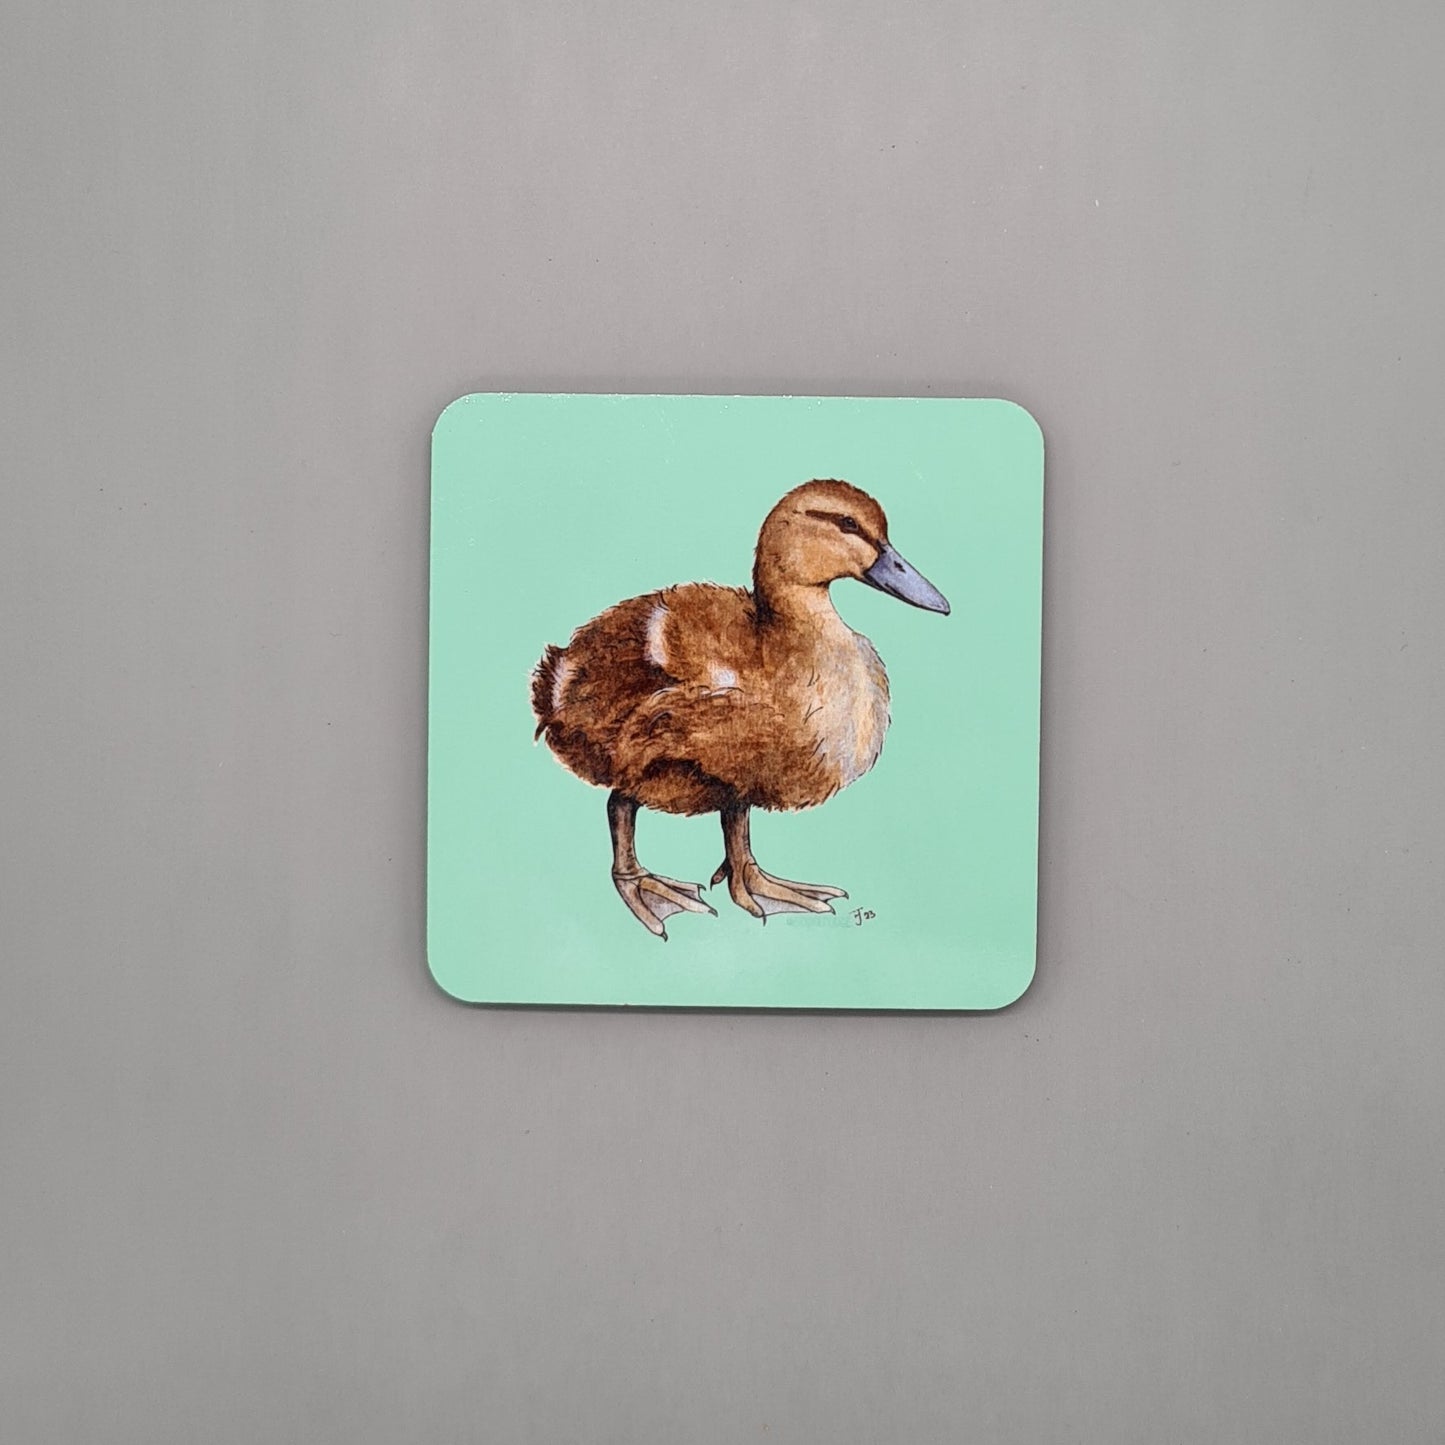 Beautiful Mallard Duckling Art Hardwood Coaster featuring 'Lady' Print